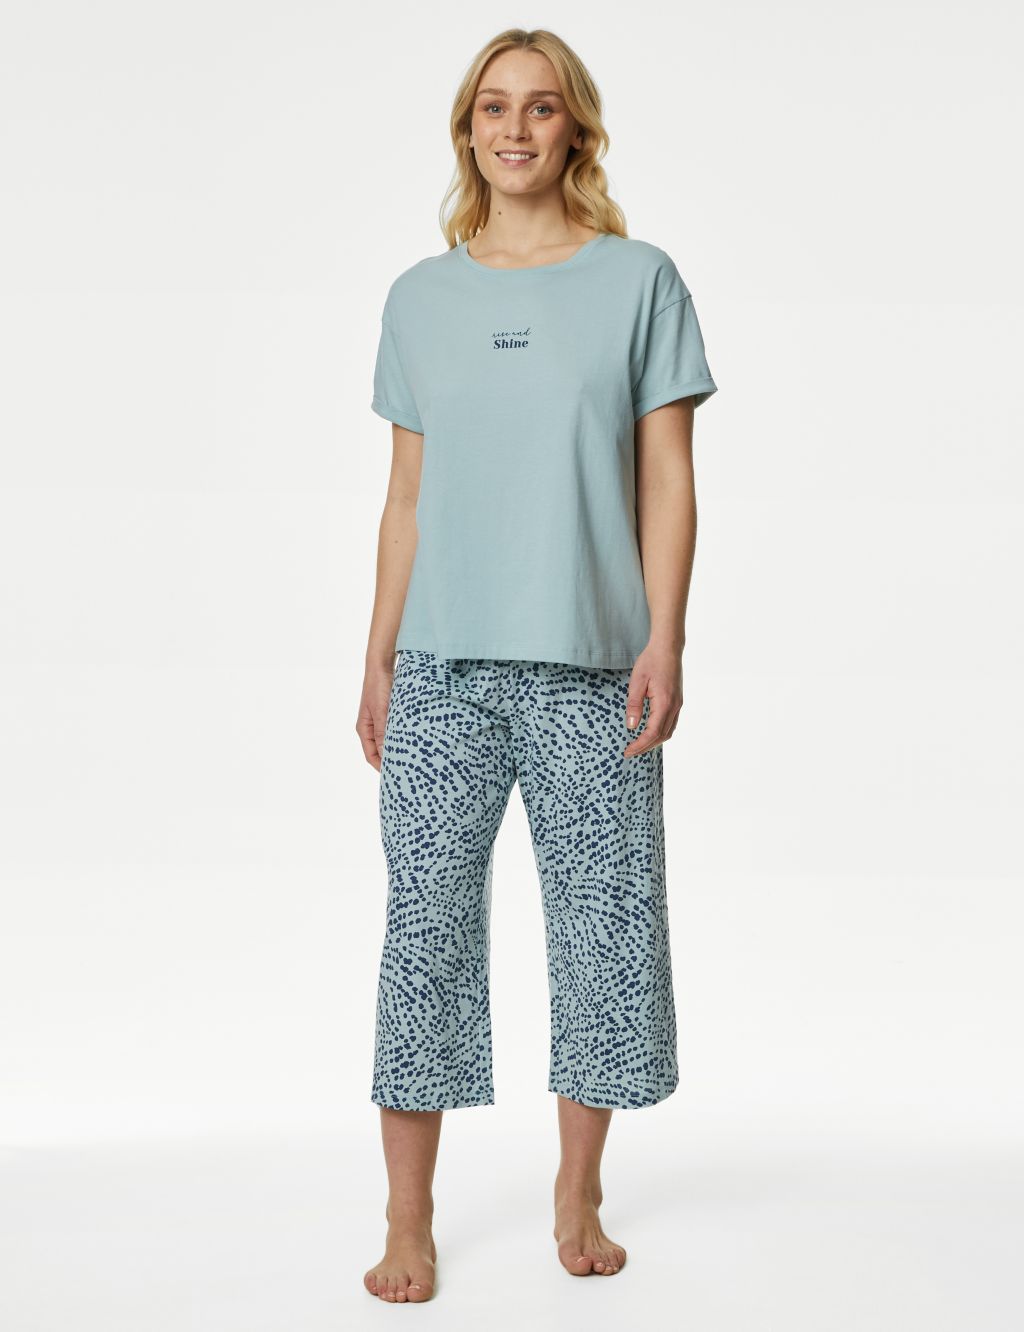 Women Pyjamas Set Long Sleeve Cartoon Tops Trouser Sleepwear Loungewear  Pajamas